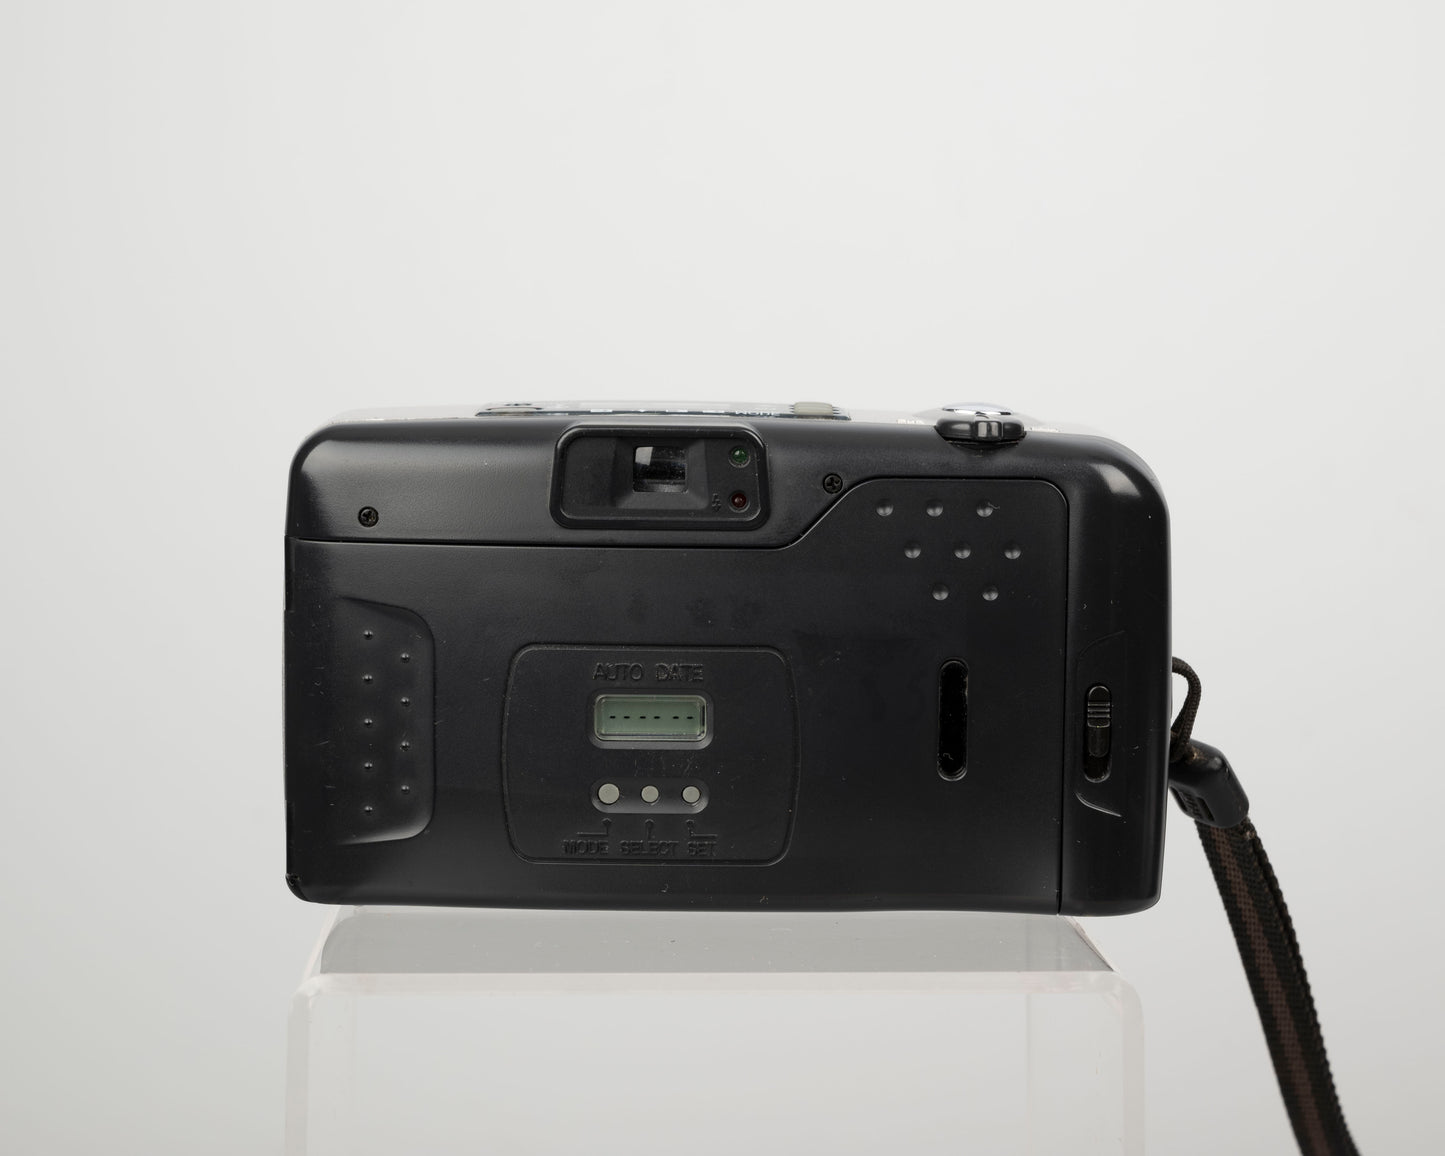 Fujifilm Zoom Date 70 35mm camera (serial 4541226)